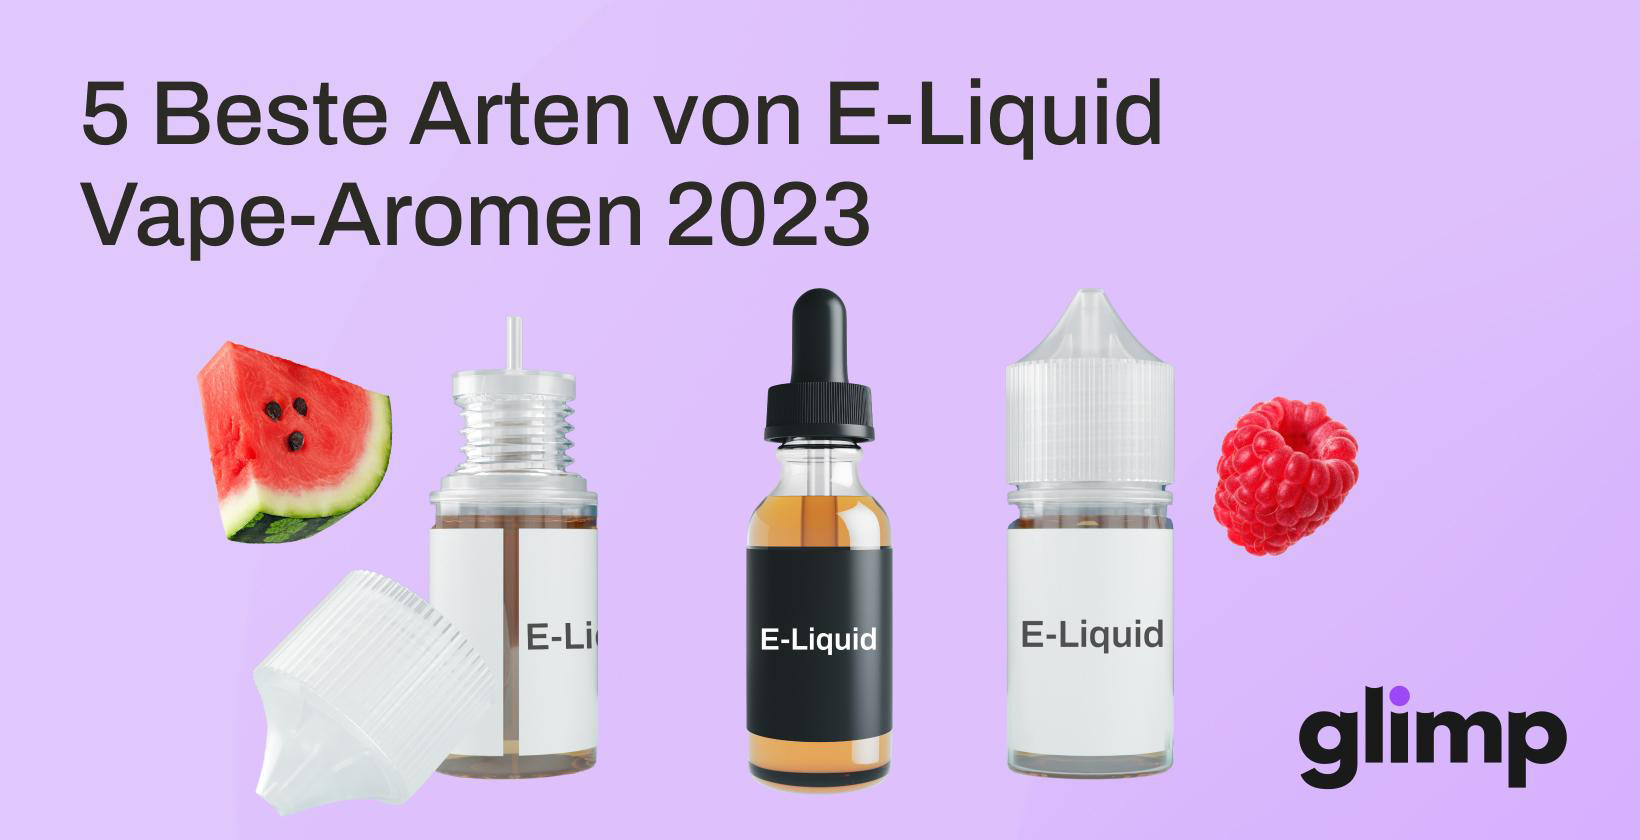 5 Beste Arten von E-Liquid Vape-Aromen 2023